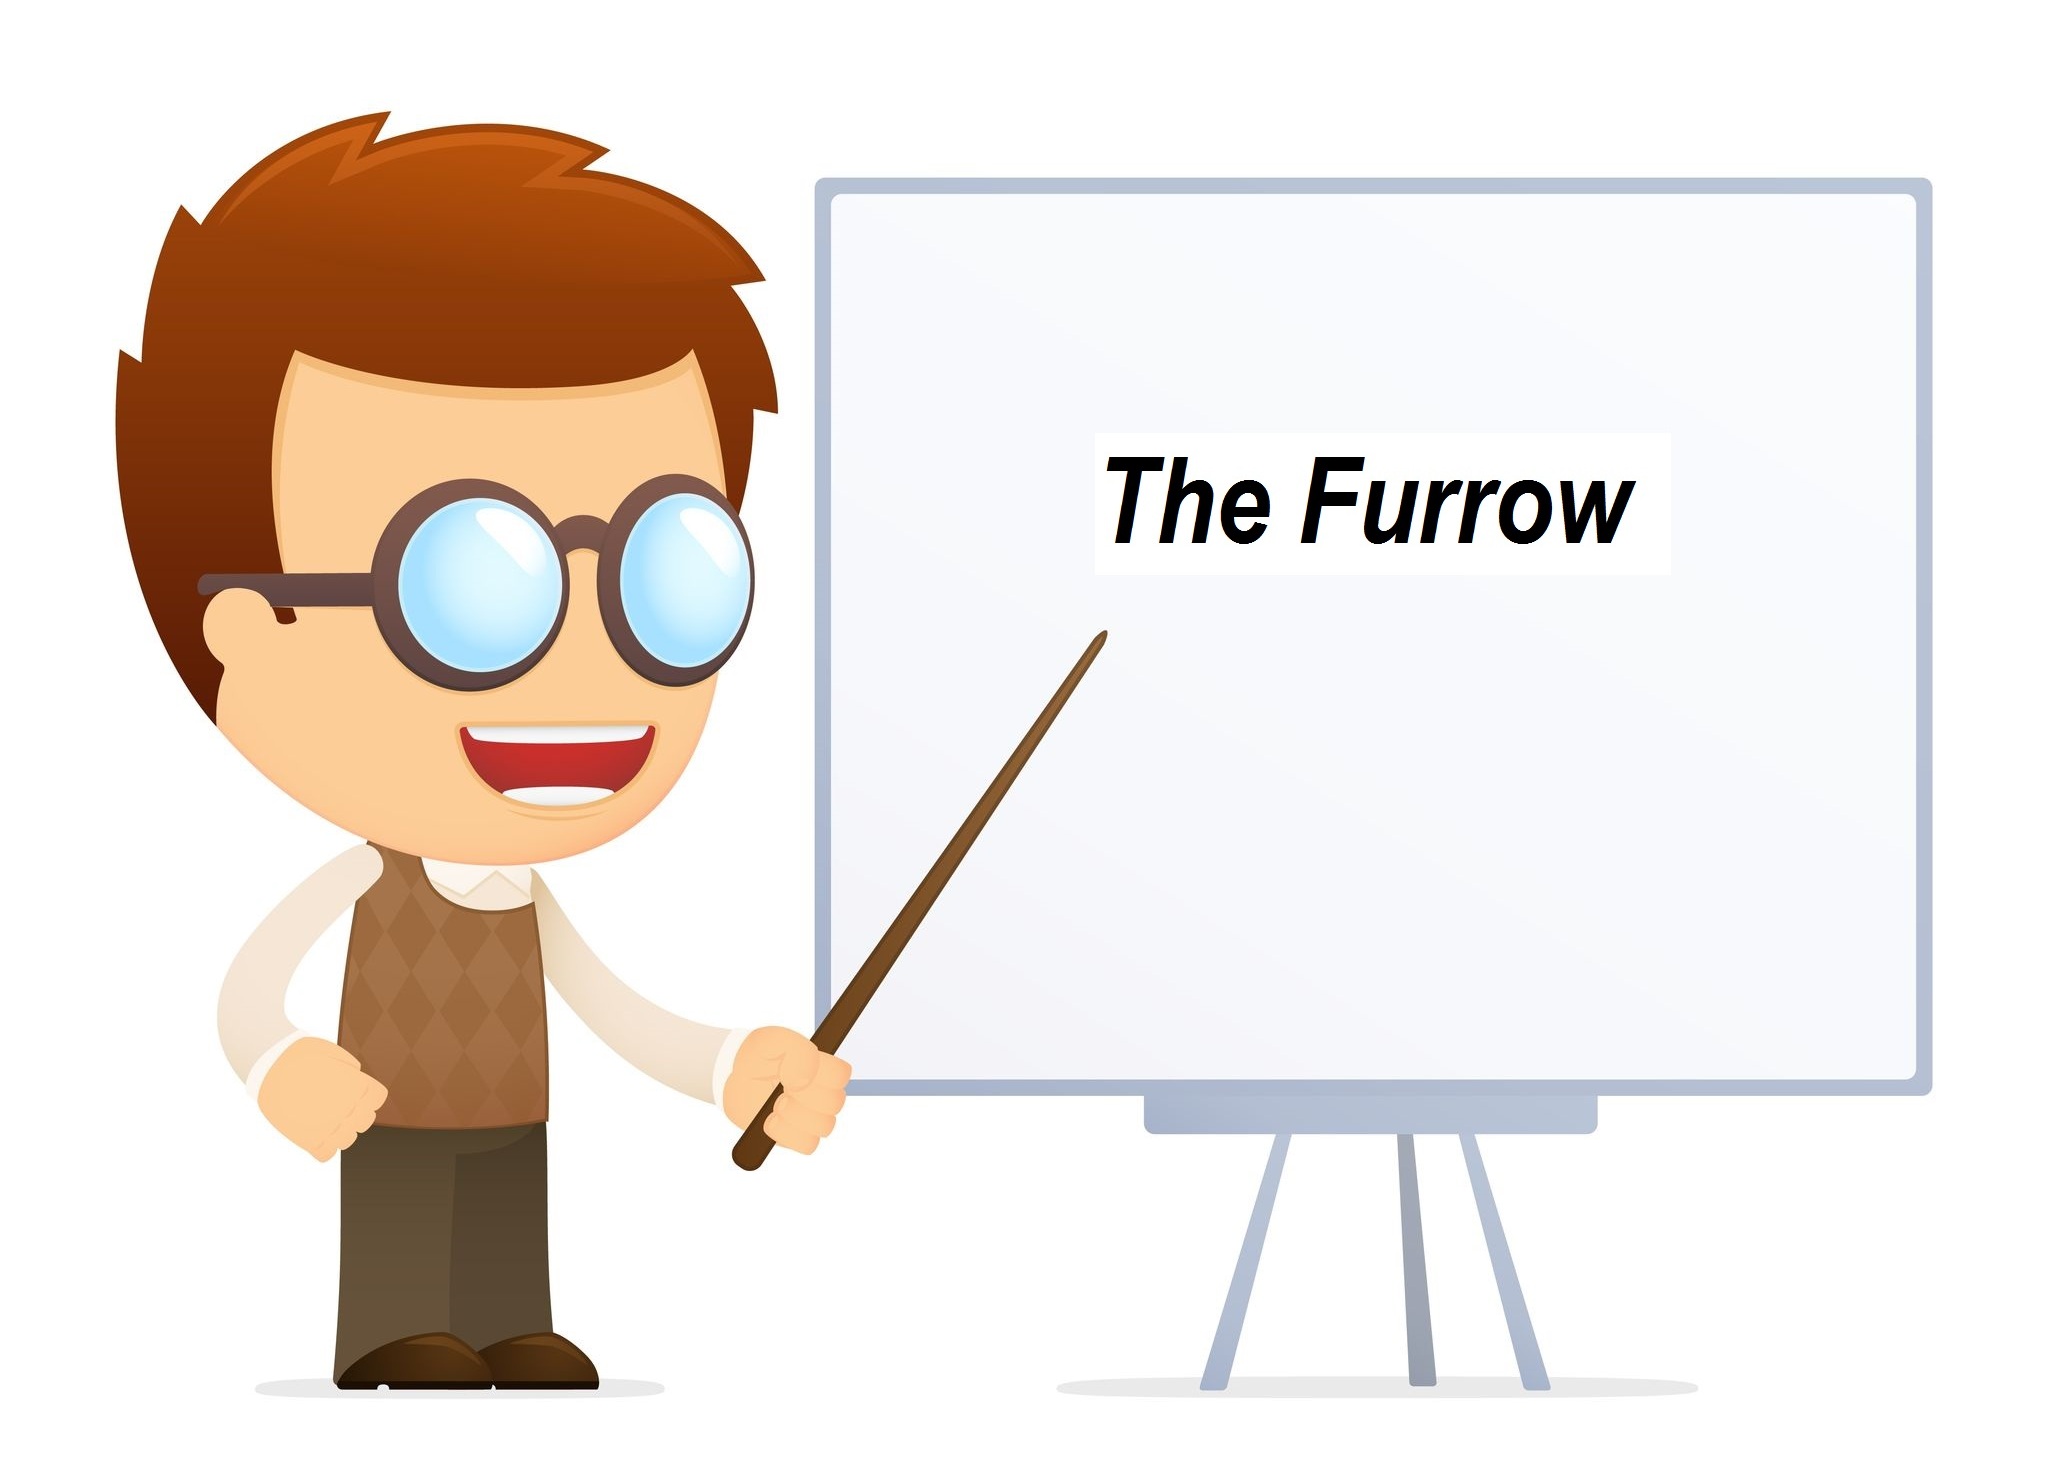 The Furrow